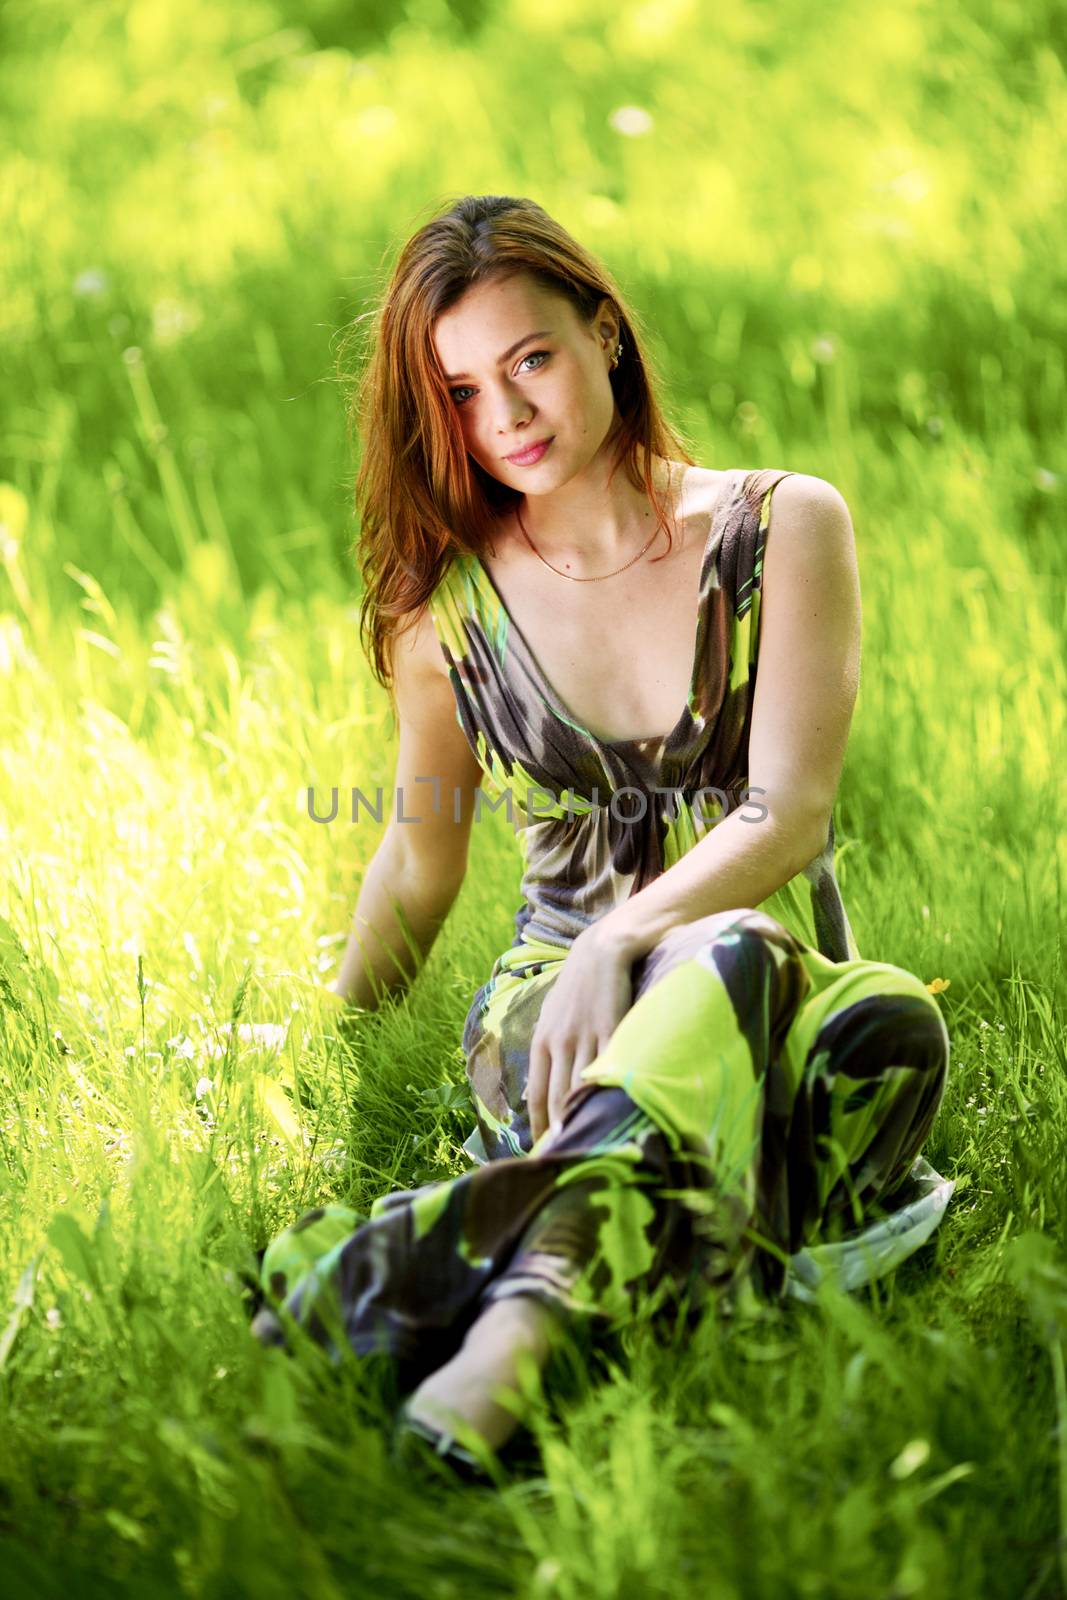 Beautiful woman sitting in a green field enjoying the summer sunlight